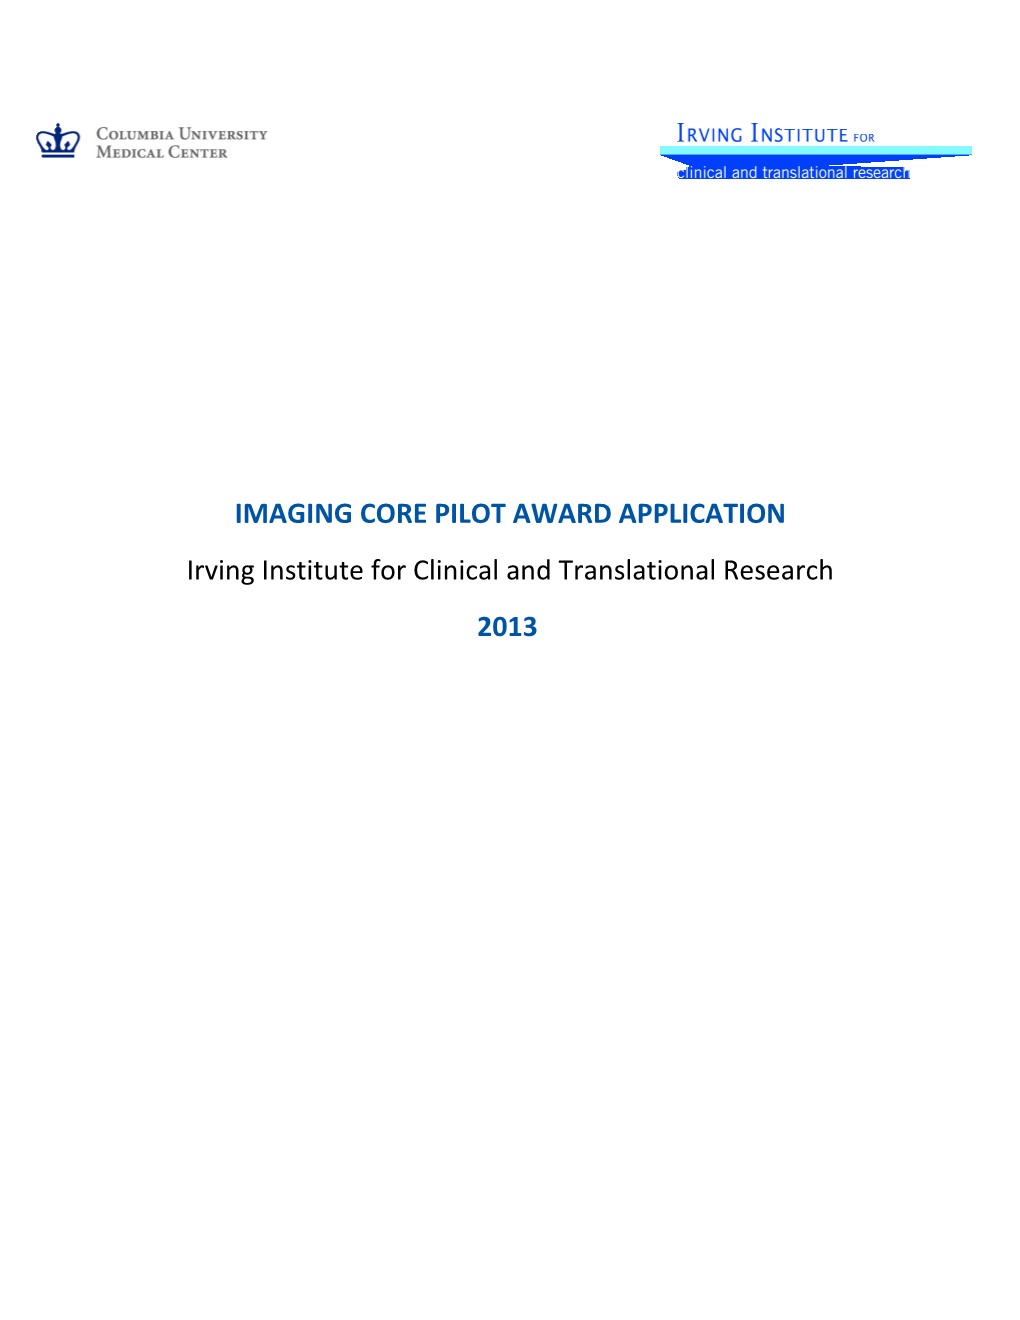 Imaging Core Pilotaward Application